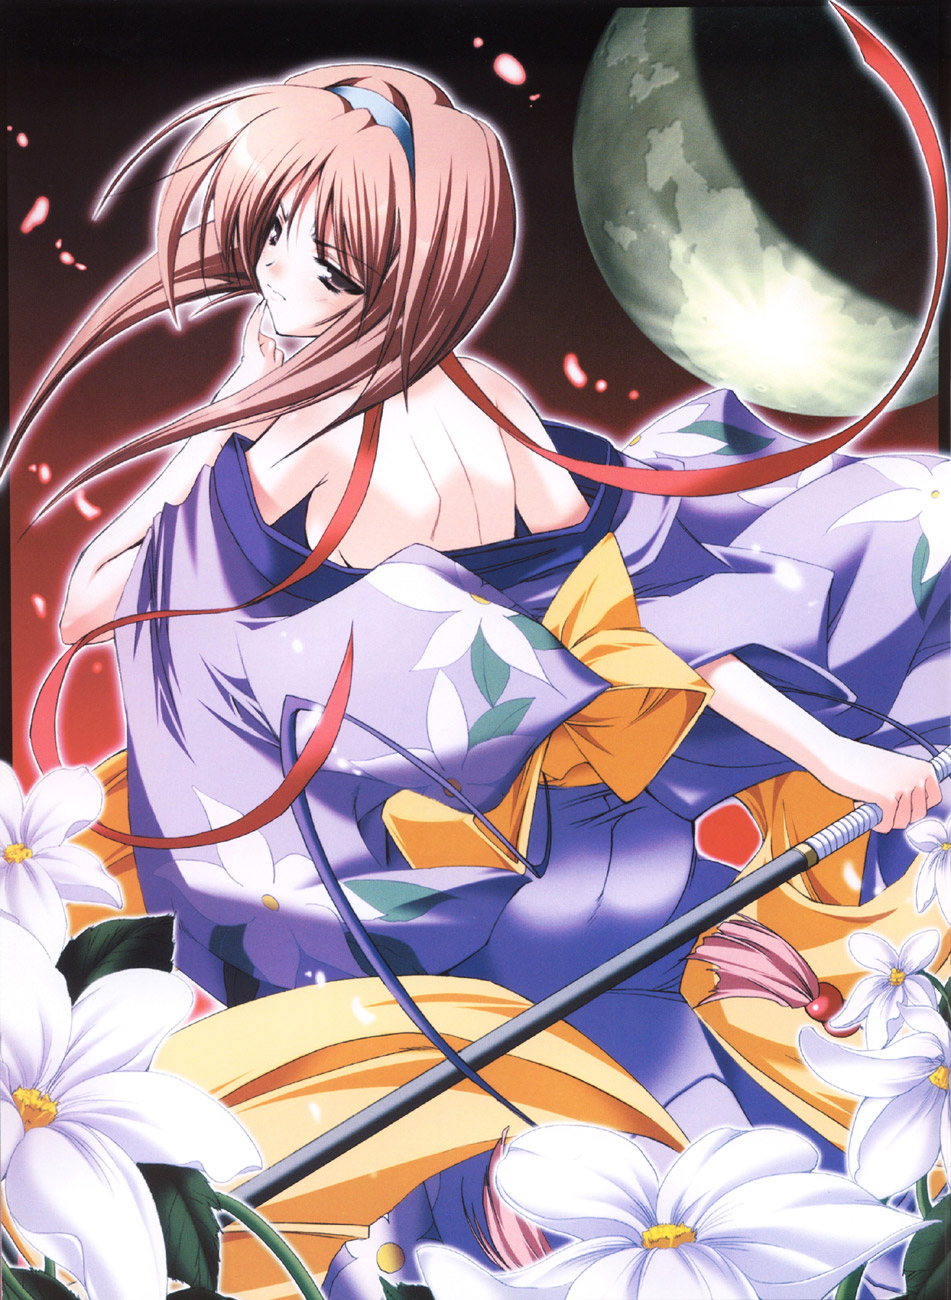 Sakura Wars illustrations: the Origin + Tribute image by Misakuranankotsu